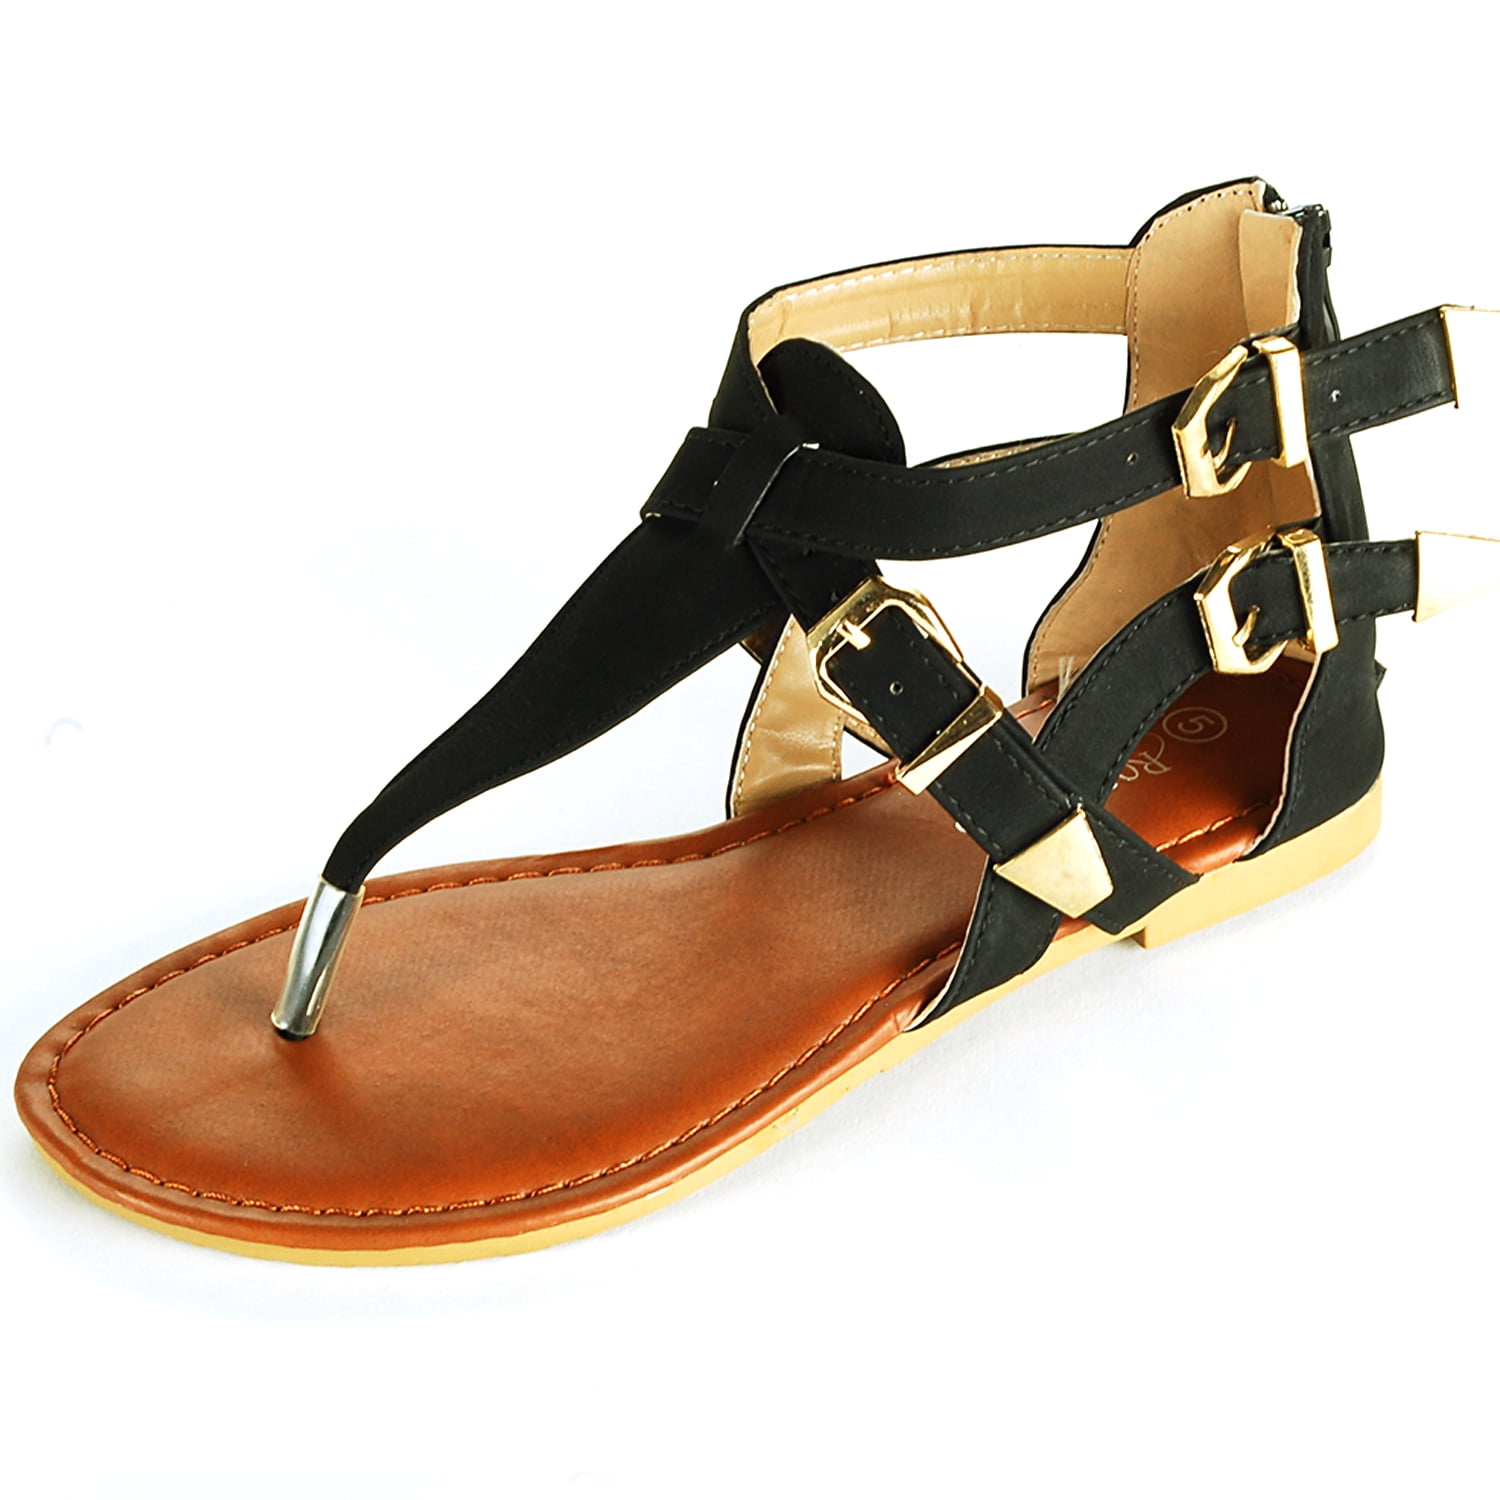 gladiator sandals zipper back